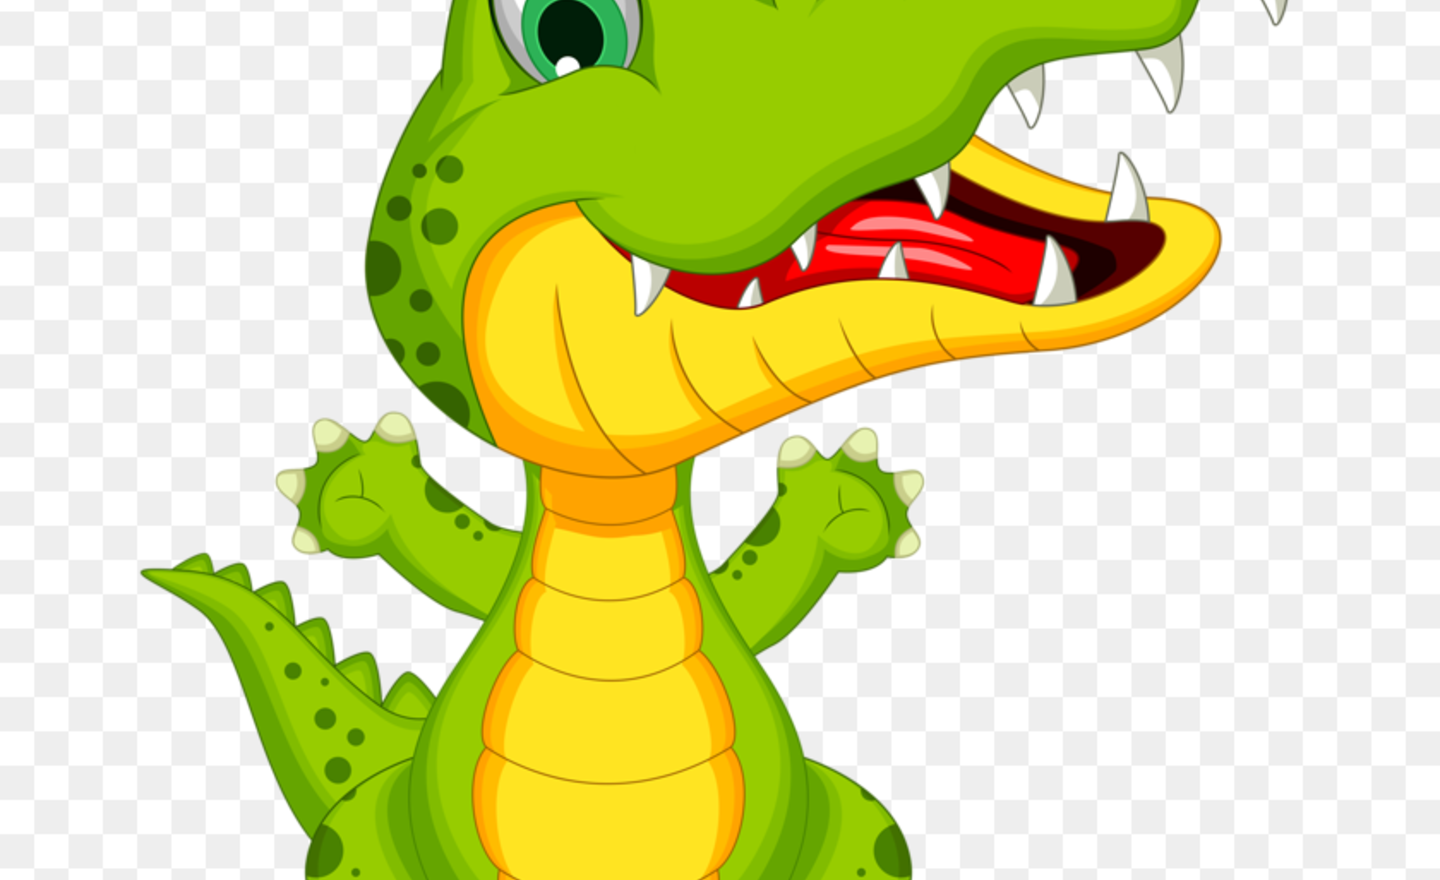 Image of Do you love crocodiles?